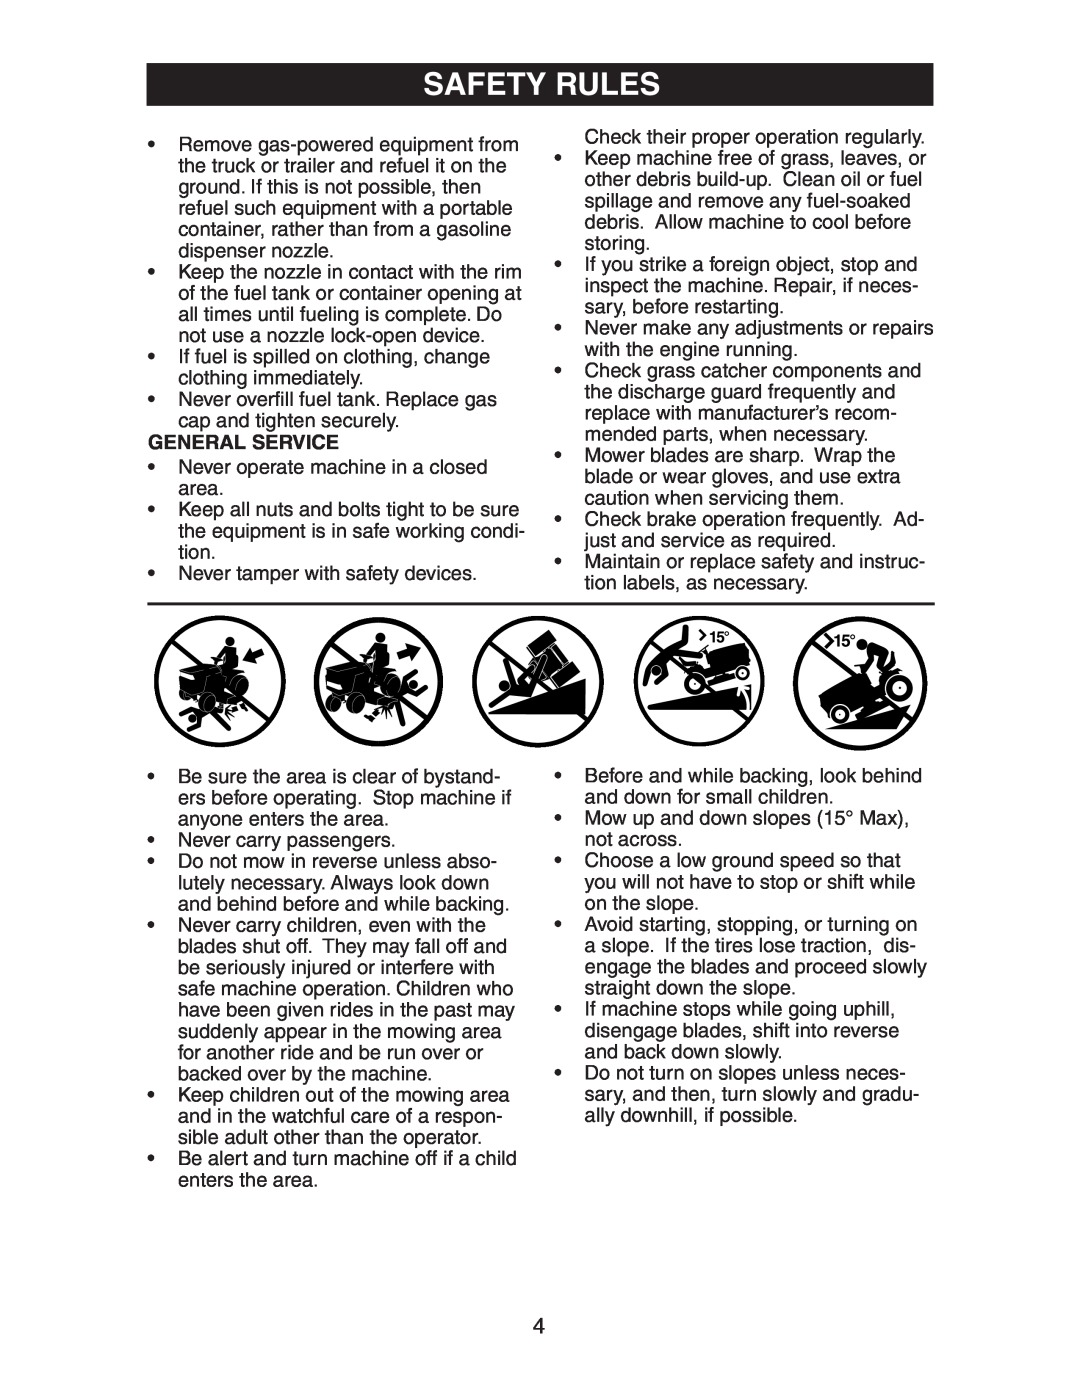 Husqvarna LOYTH20F42T manual General Service, Safety Rules 